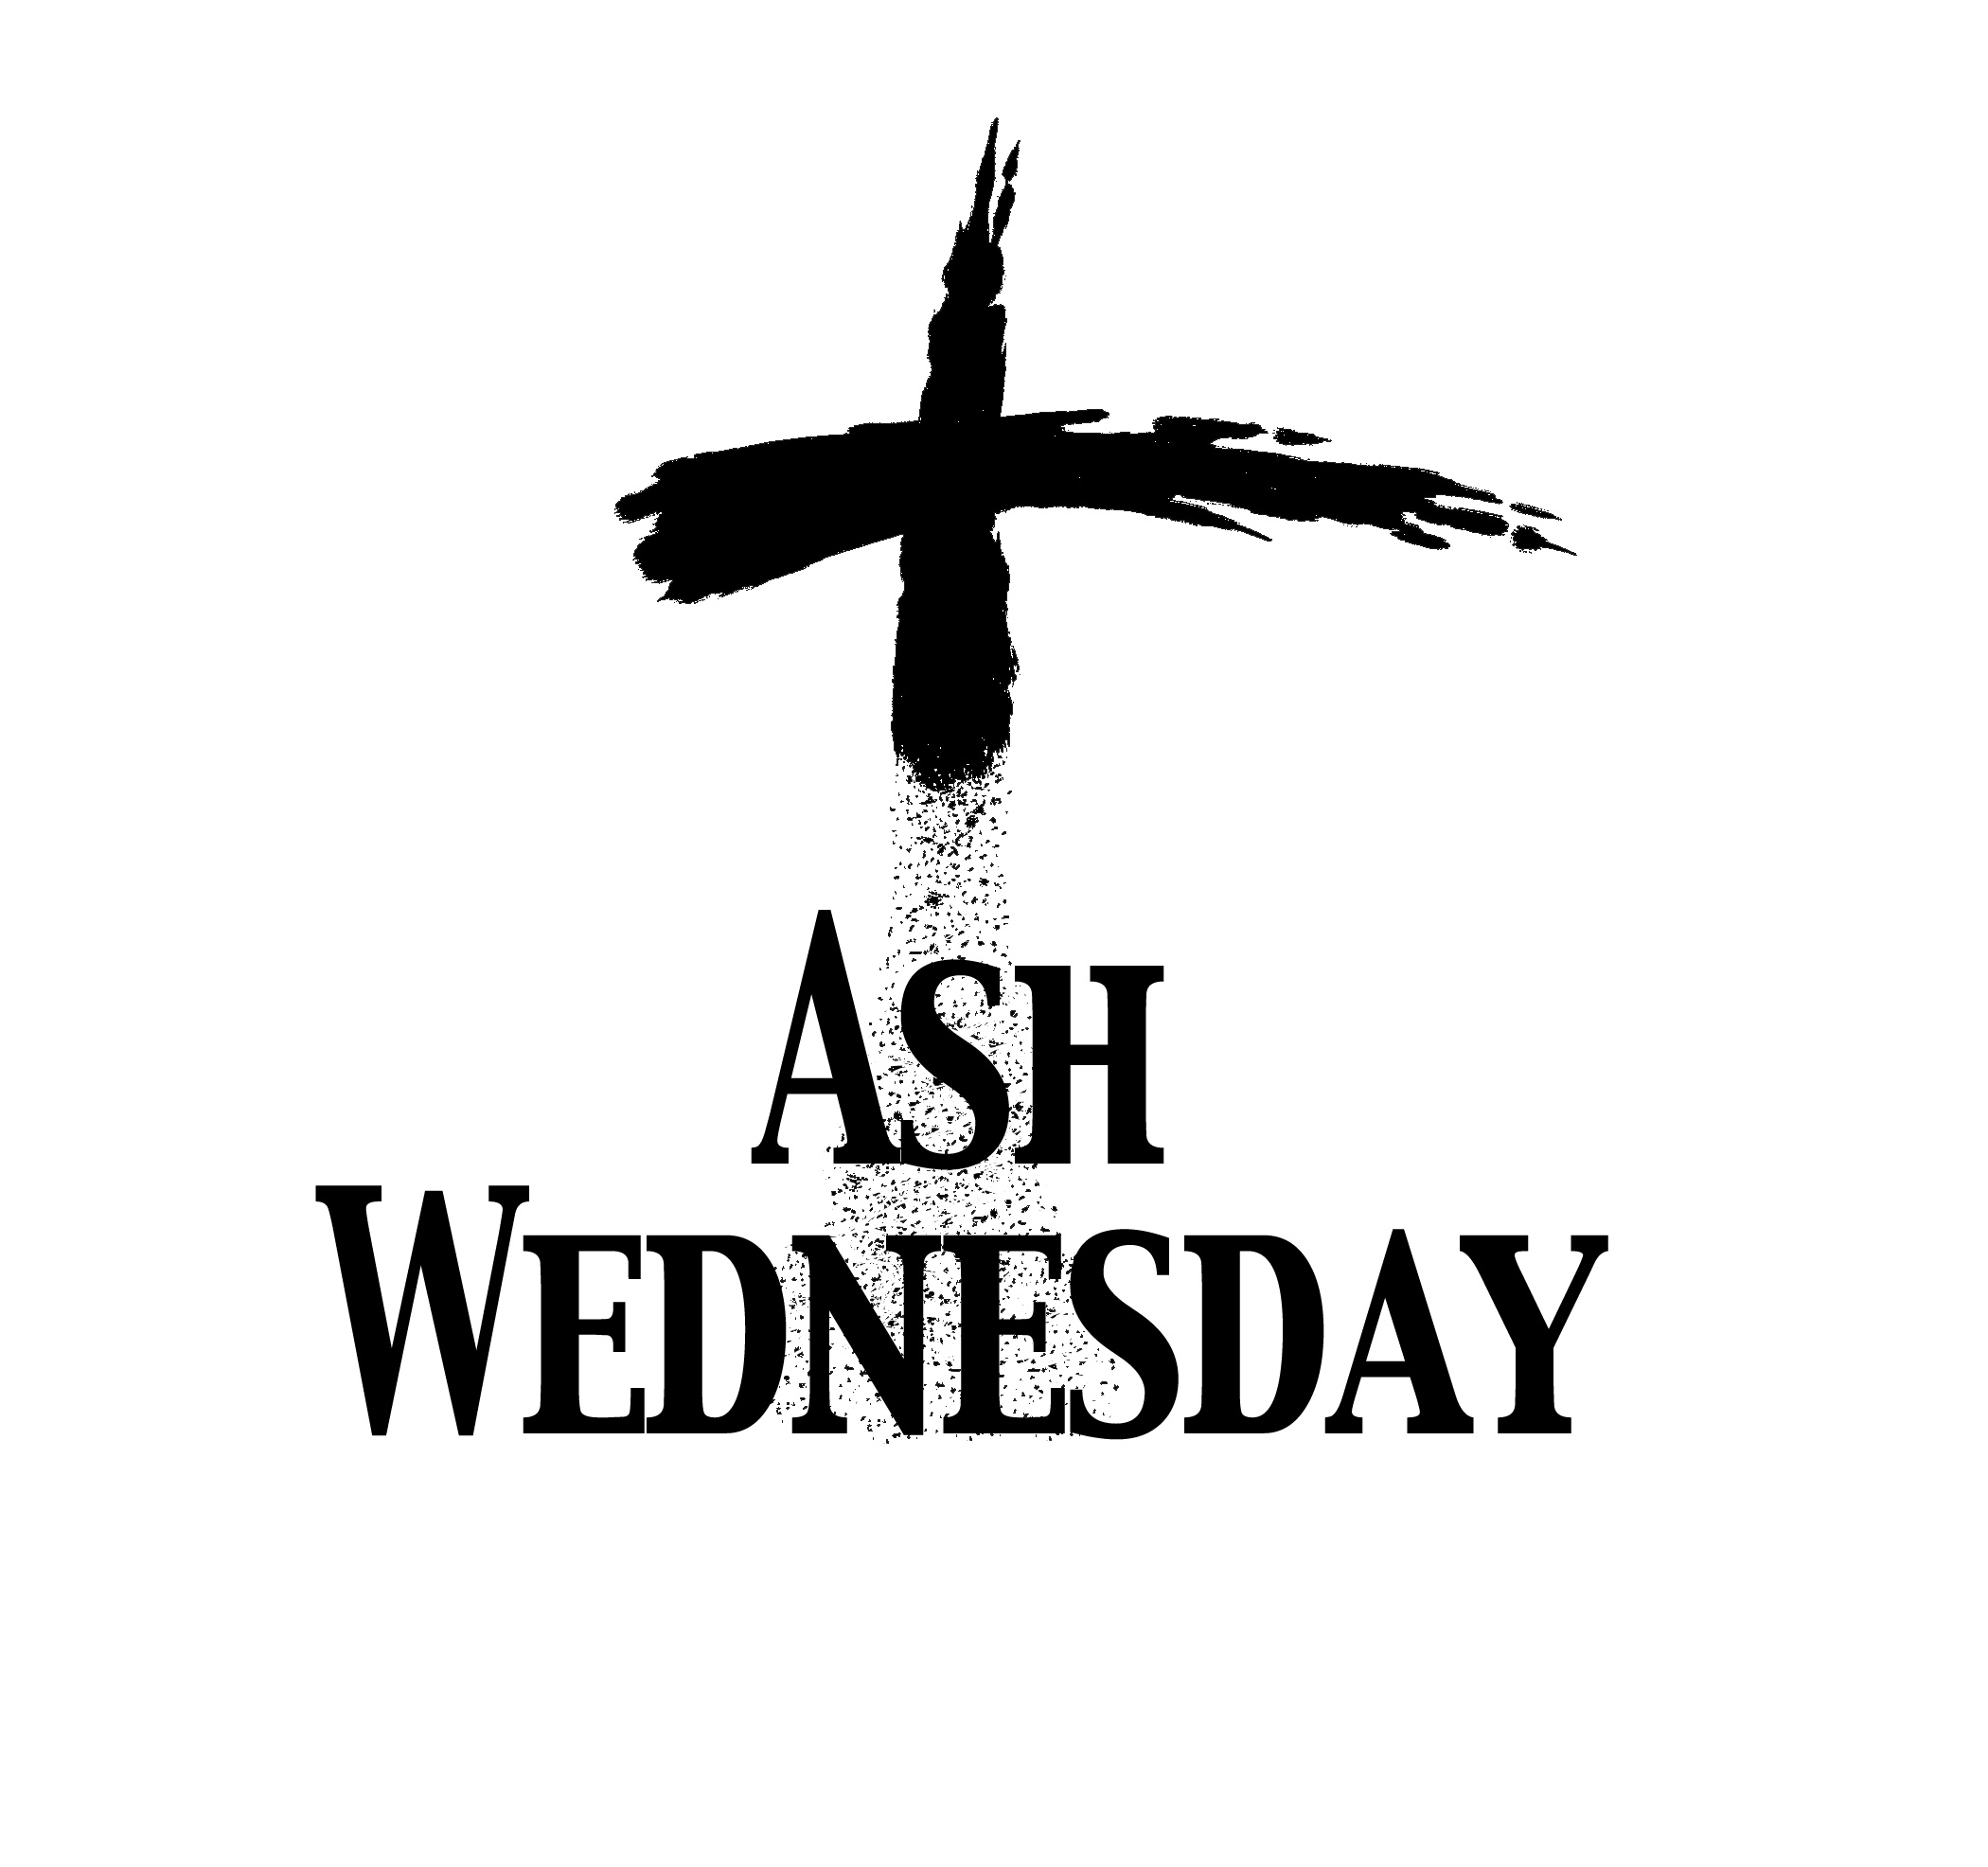 ASH WEDNESDAY Schedule – St. Anthony of Padua Parish